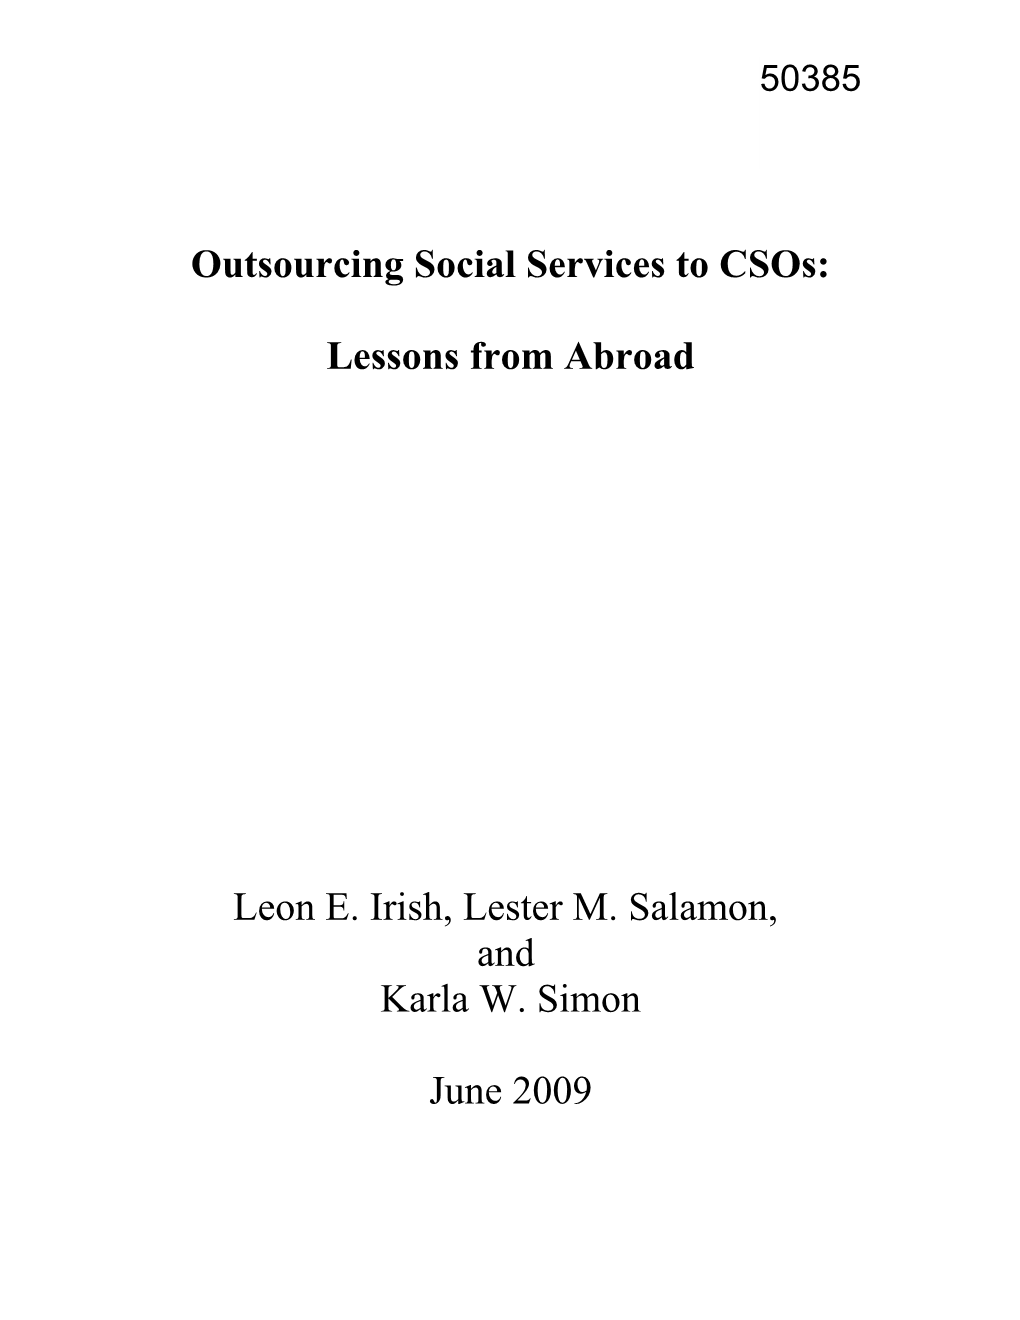 Social Service Outsourcing to Csos